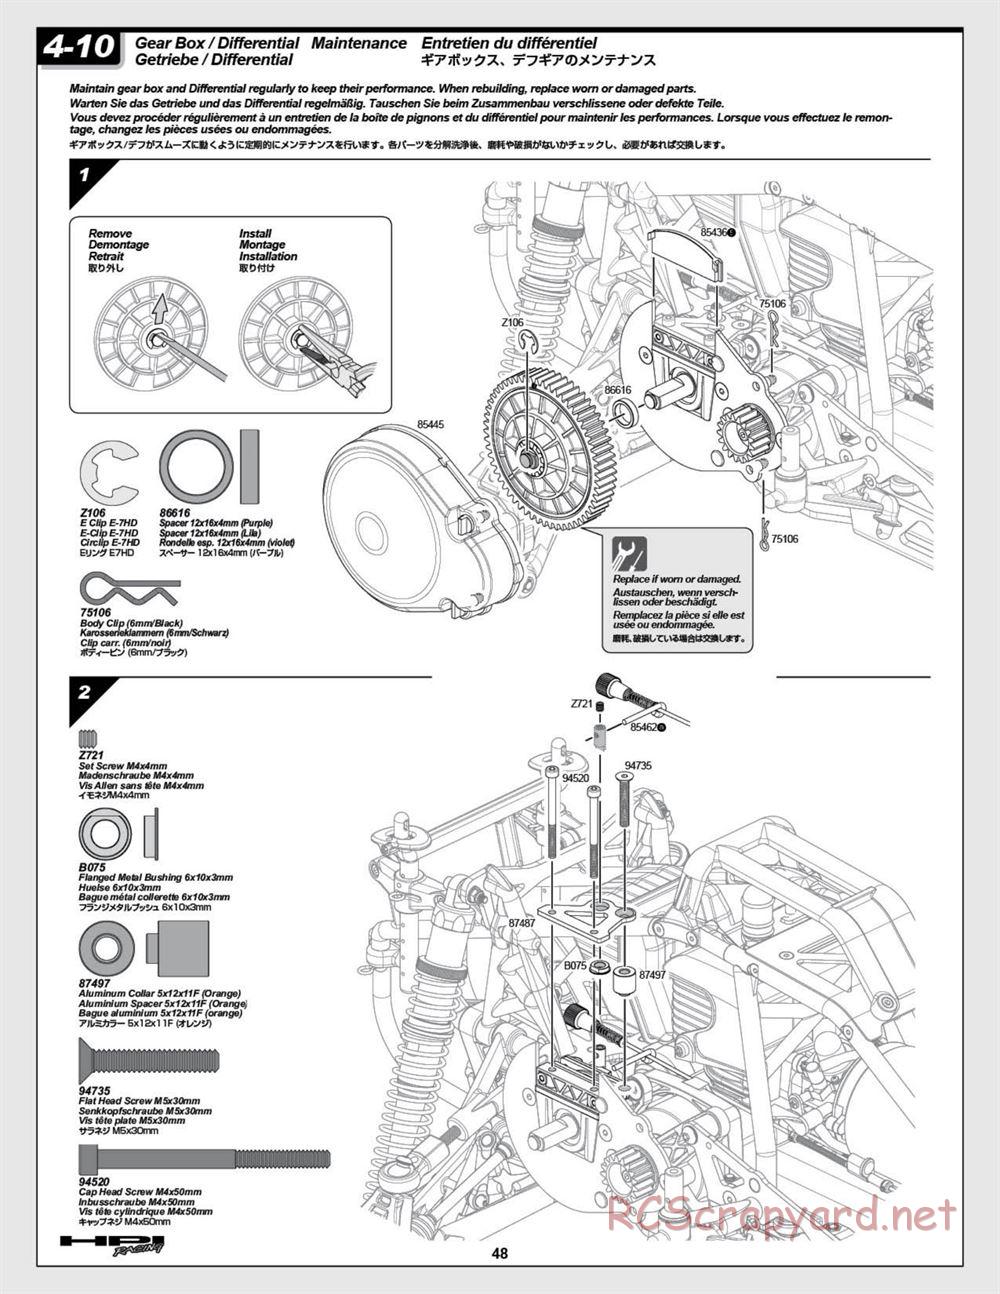 HPI - Baja 5T (2008) - Manual - Page 48